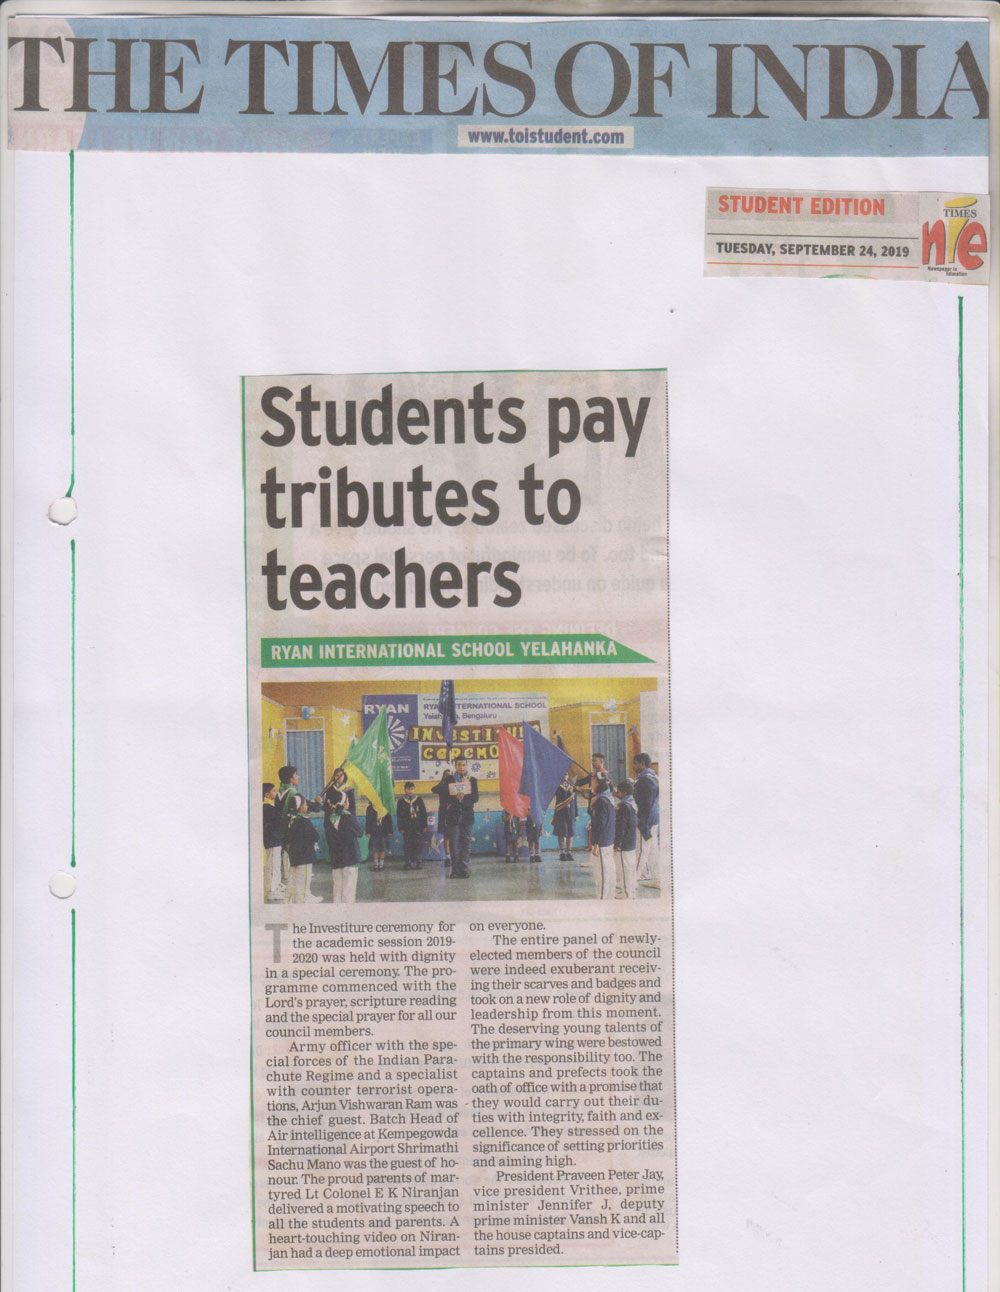 Students Pay Tribute toTeachers’ - The New Indian Express - Ryan International School, Yelahanka - Ryan Group